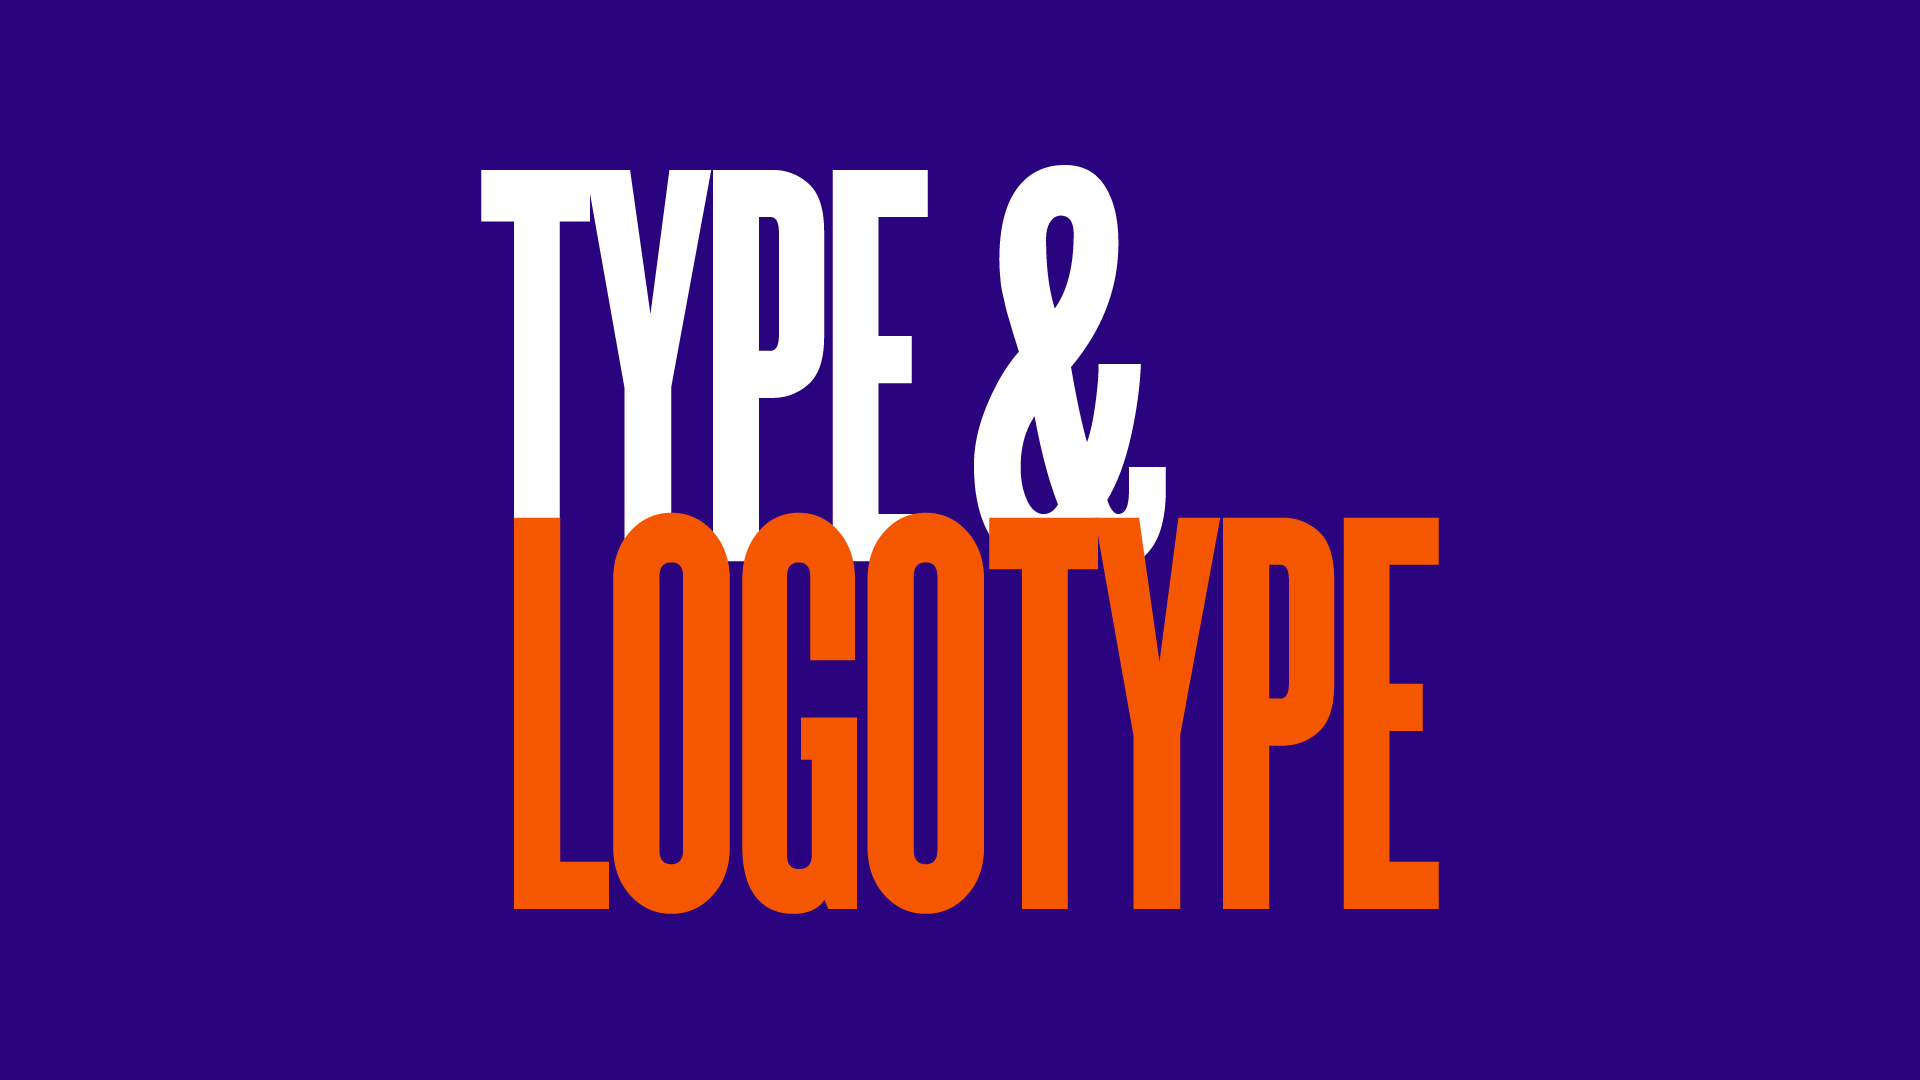 Set of initial letter C logo design template. - MasterBundles